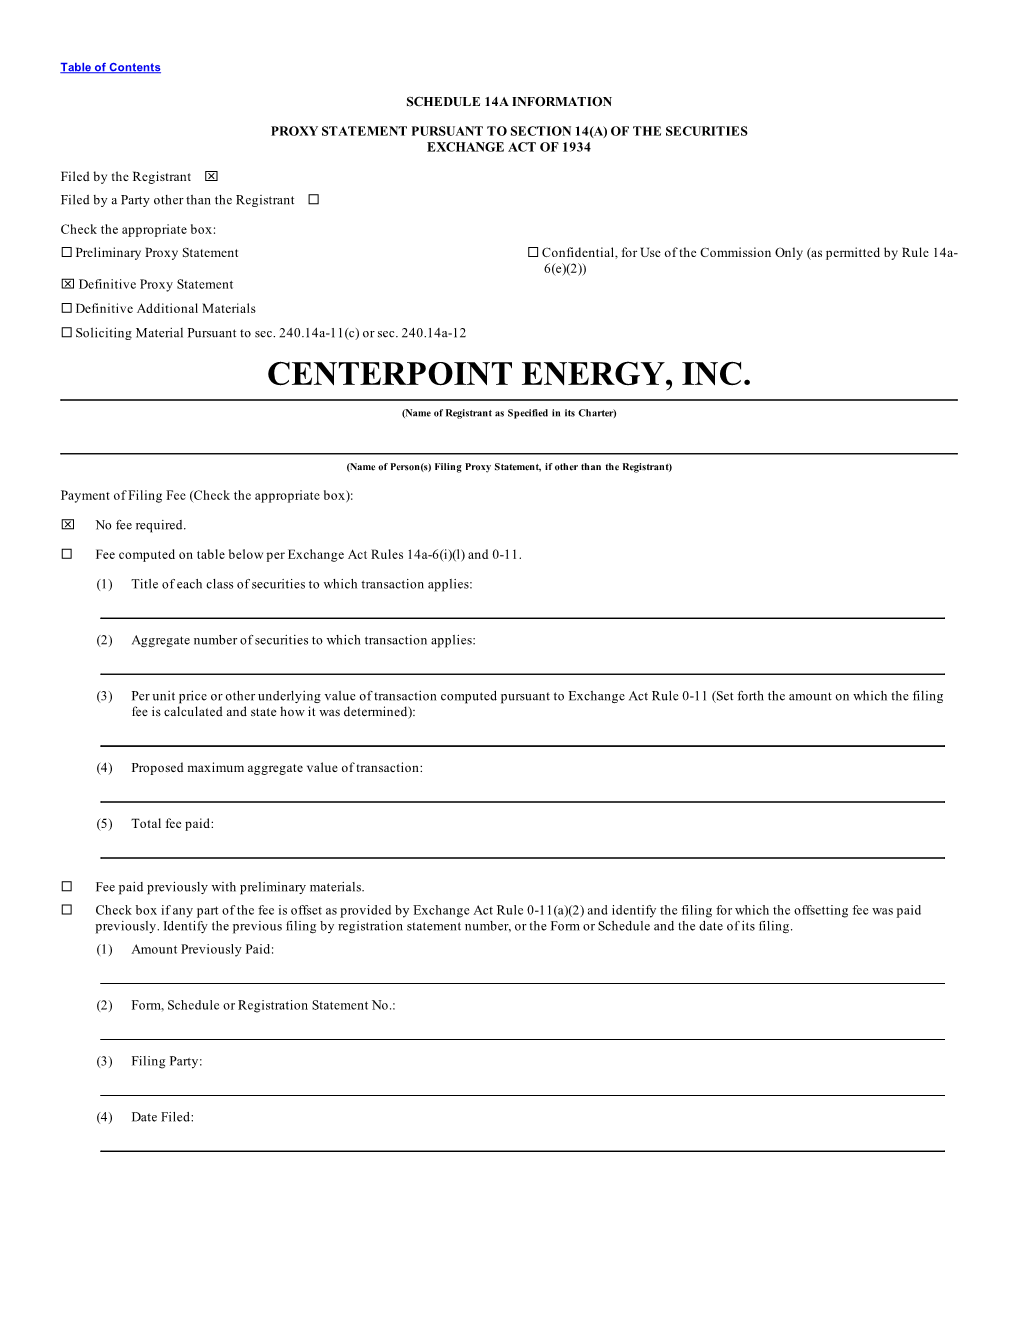 Centerpoint Energy, Inc